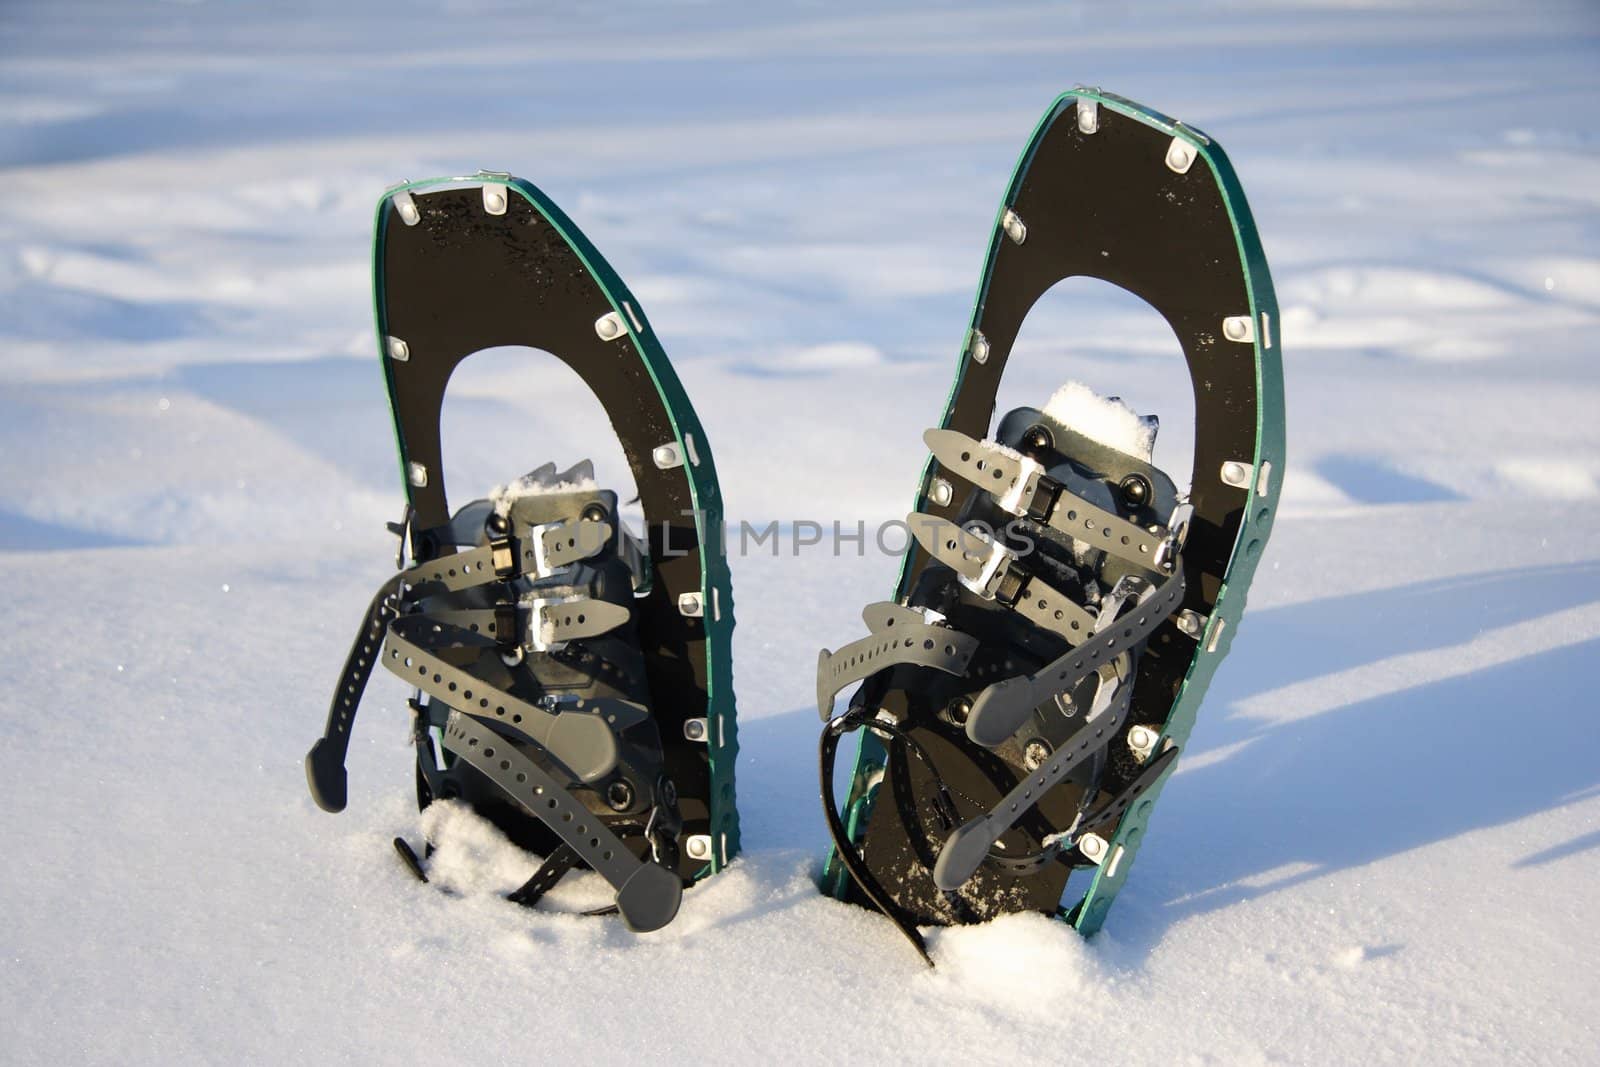 Snowshoes by Maridav